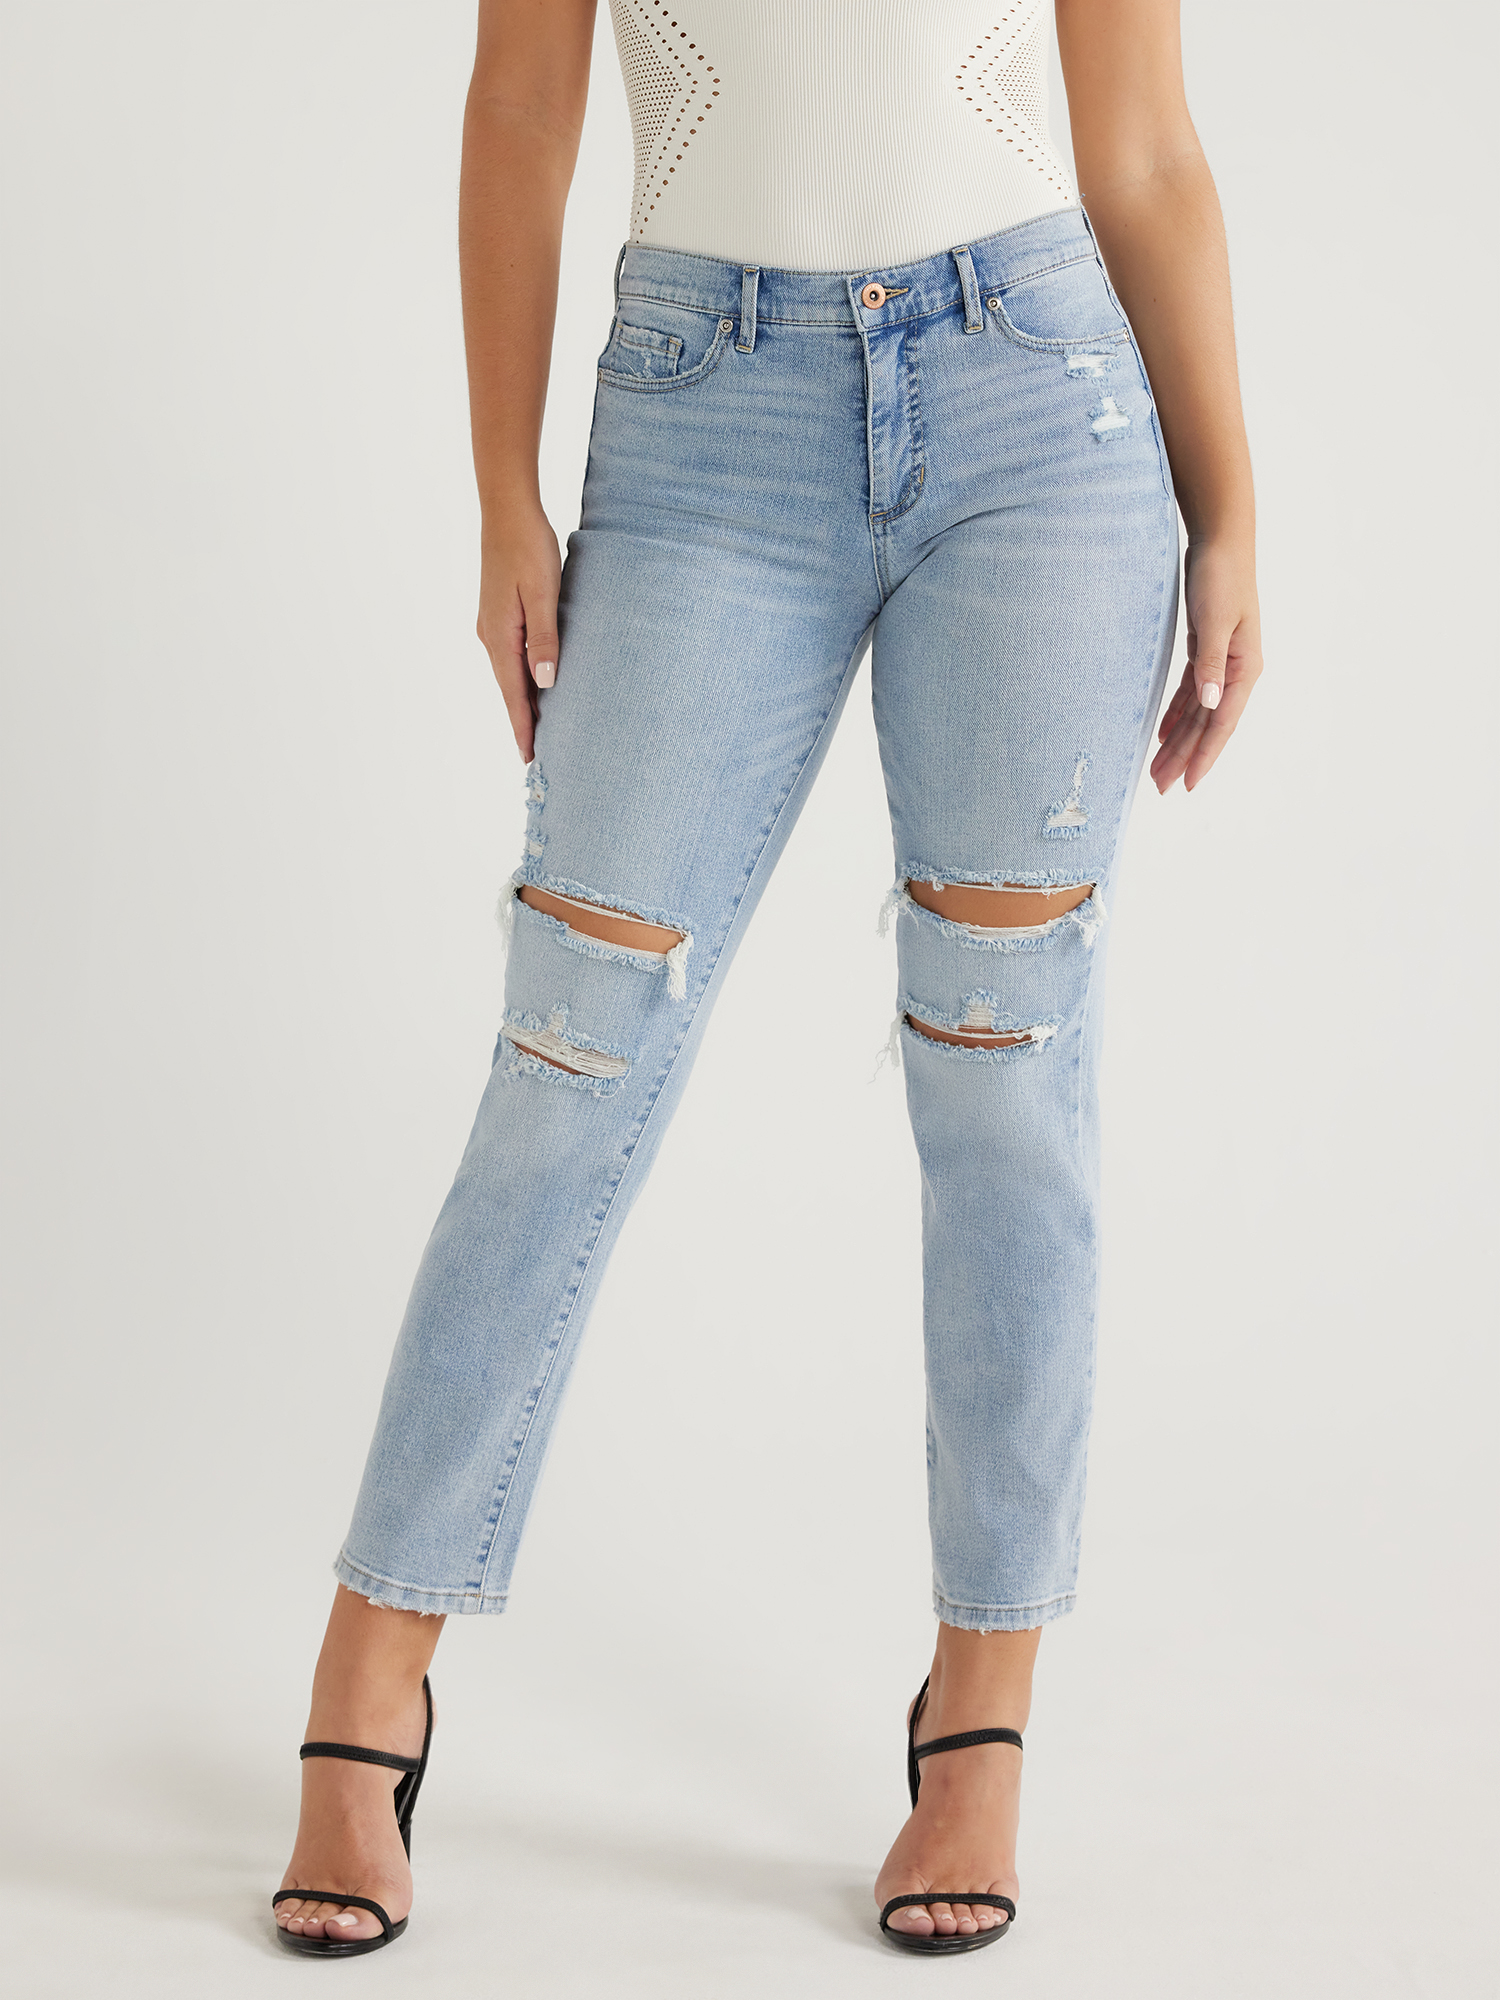 Sofia Jeans - Walmart.com